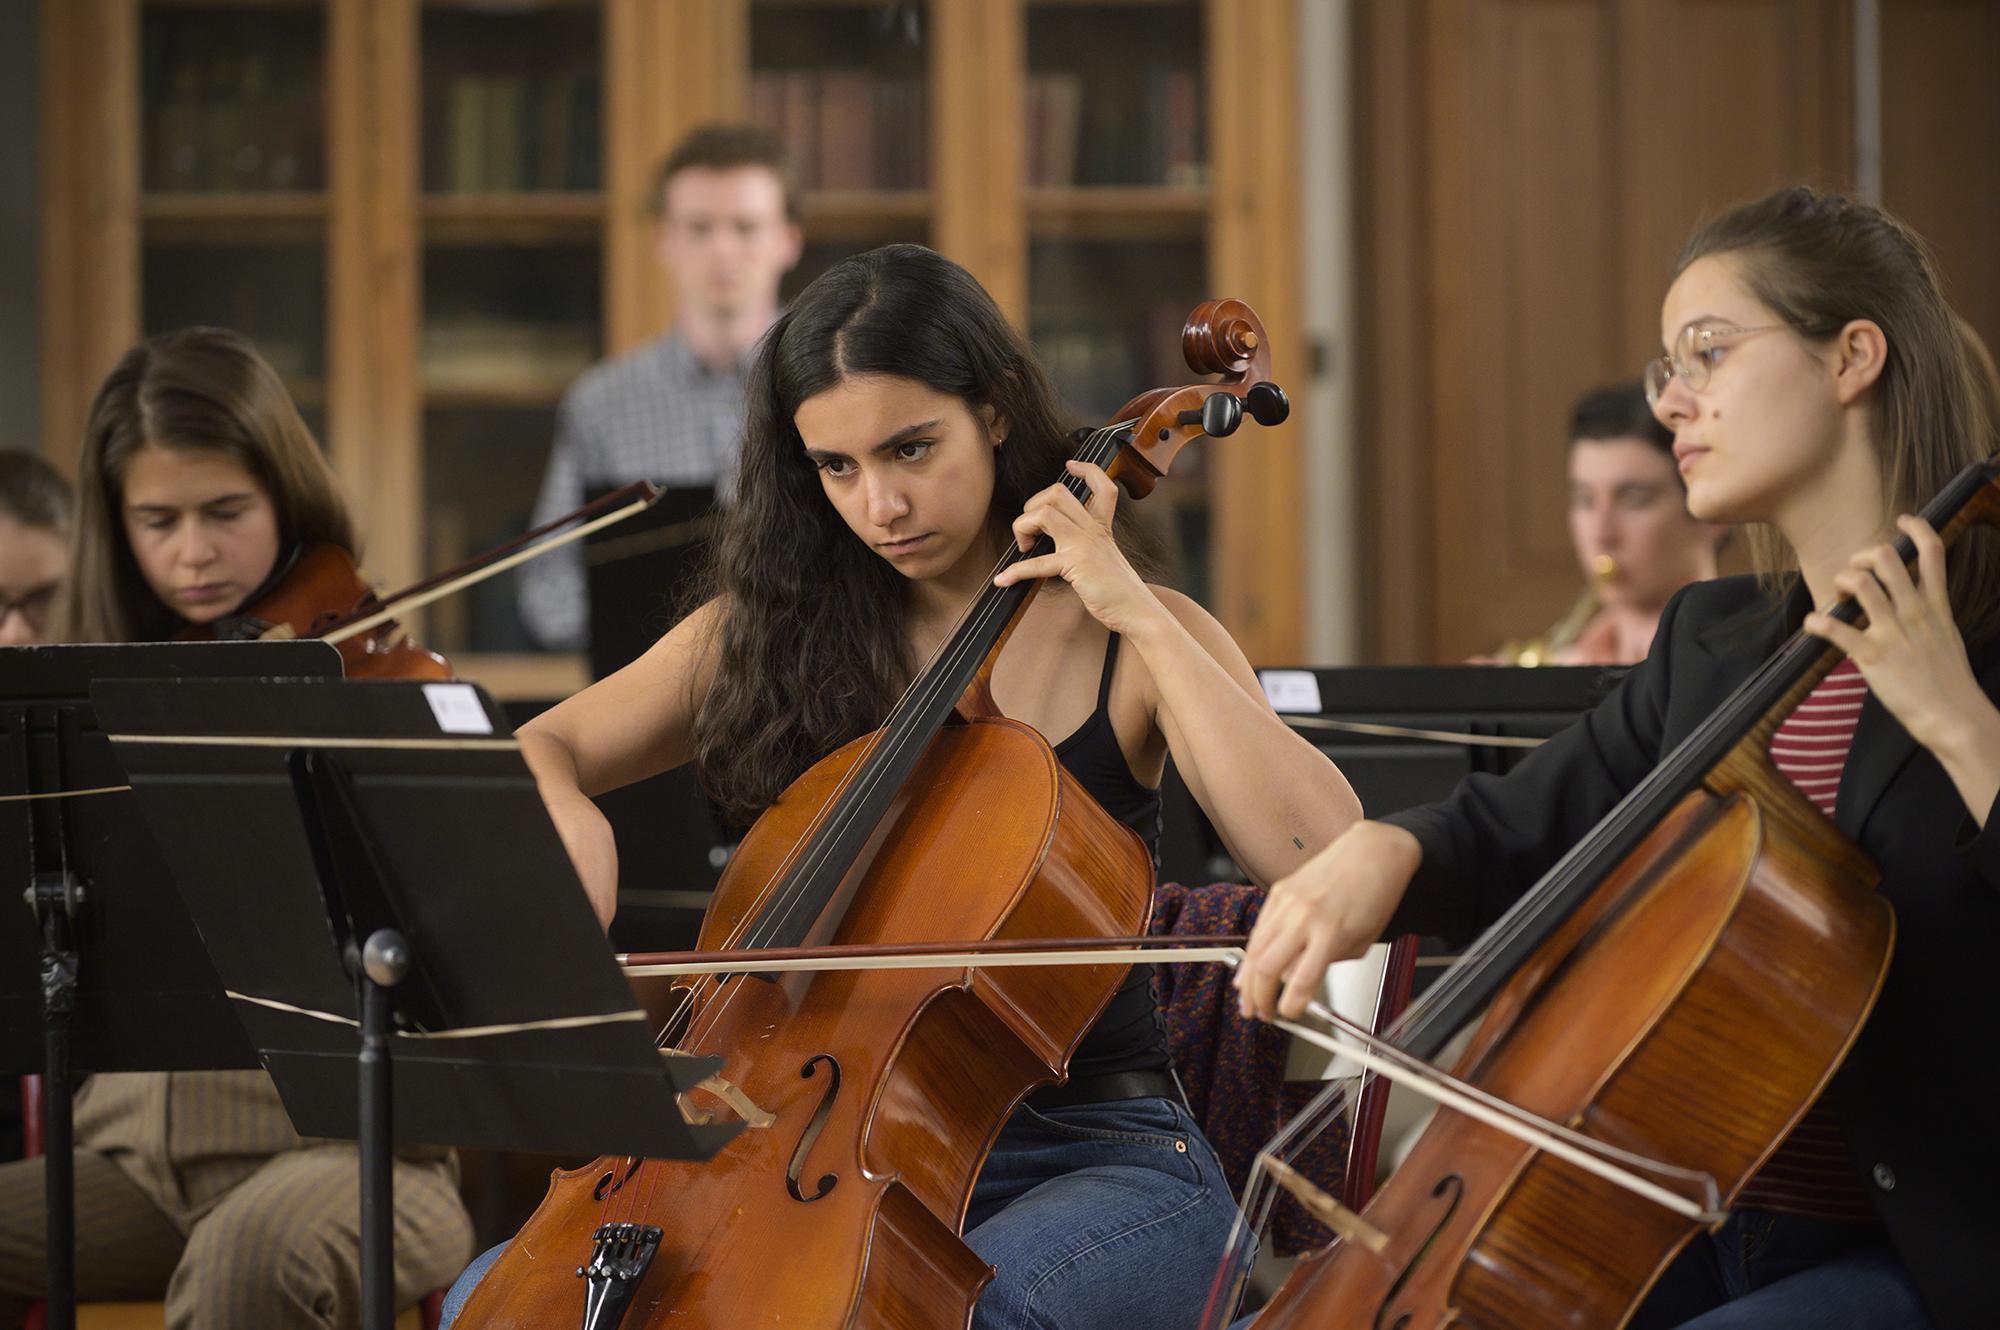 Lina El Arabi incarne la violoncelliste Fettouma Ziouani dans "Divertimento" de Marie-Castille Mention-Schaar. [Agora Films]